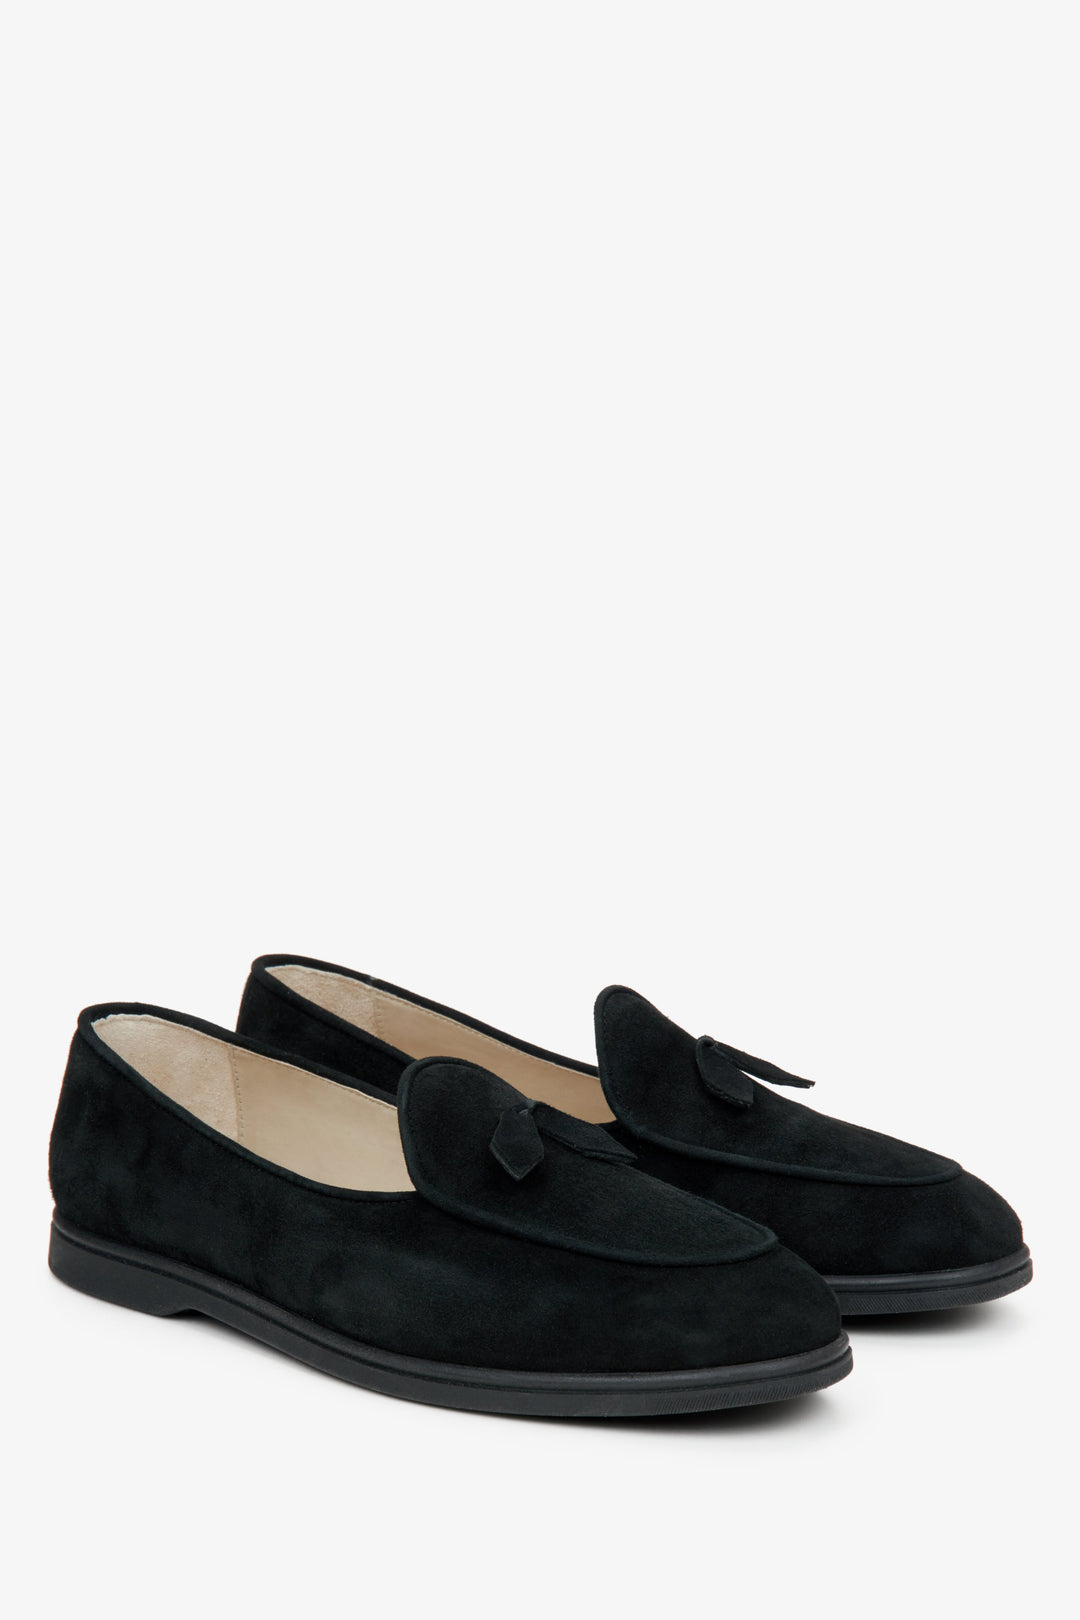 Women's black velour loafers by Estro.